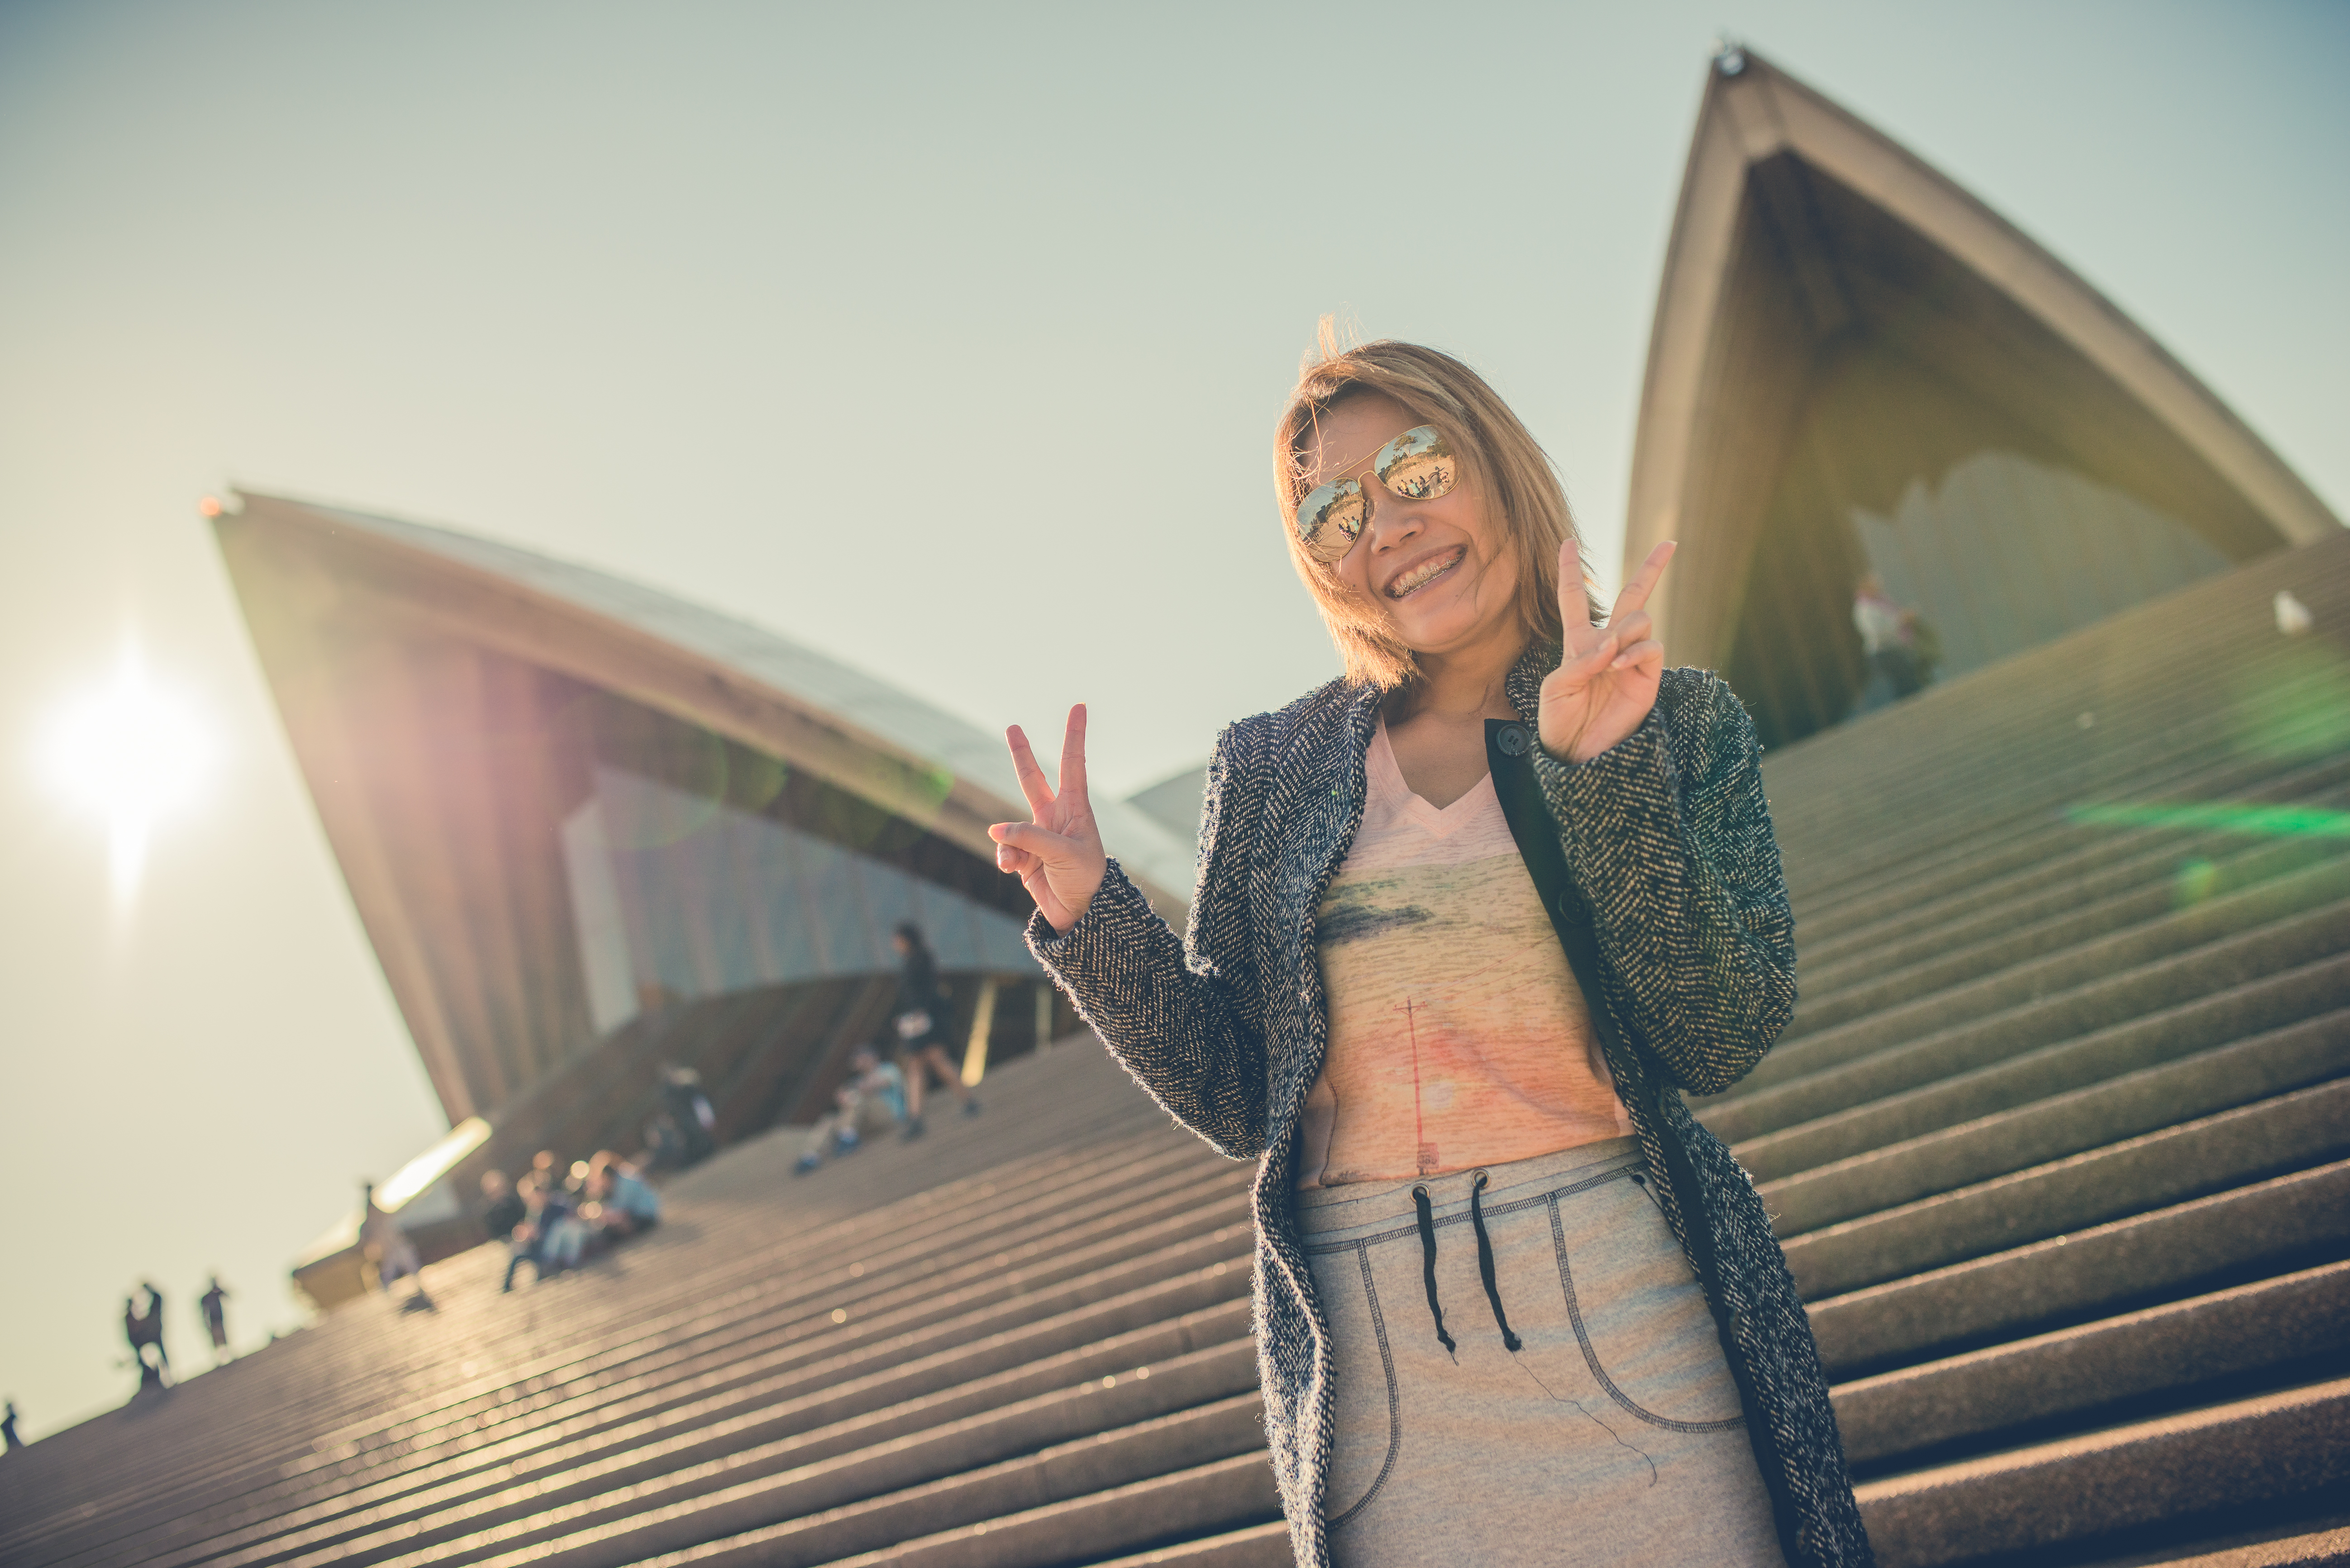 Australia: International students find Sydney ‘beautiful but expensive’